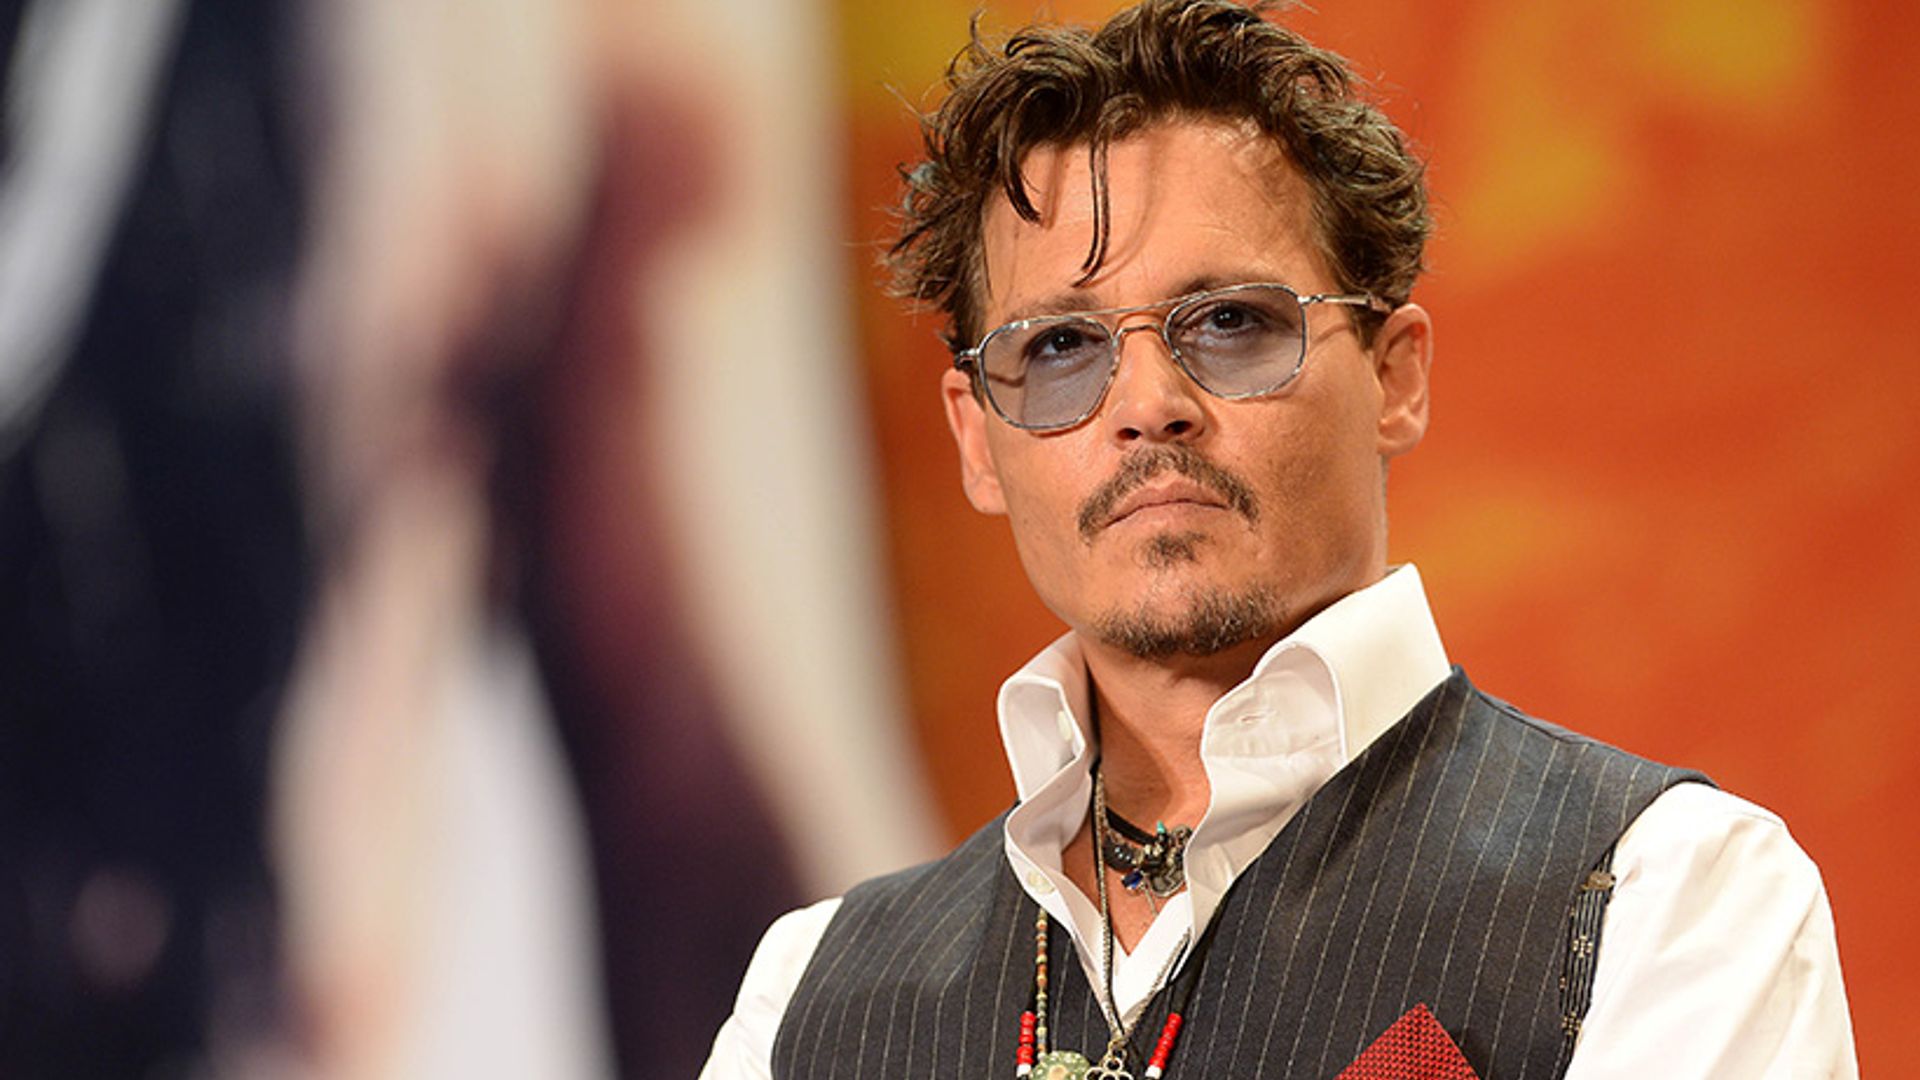 Johnny Depp wearing sunglasses